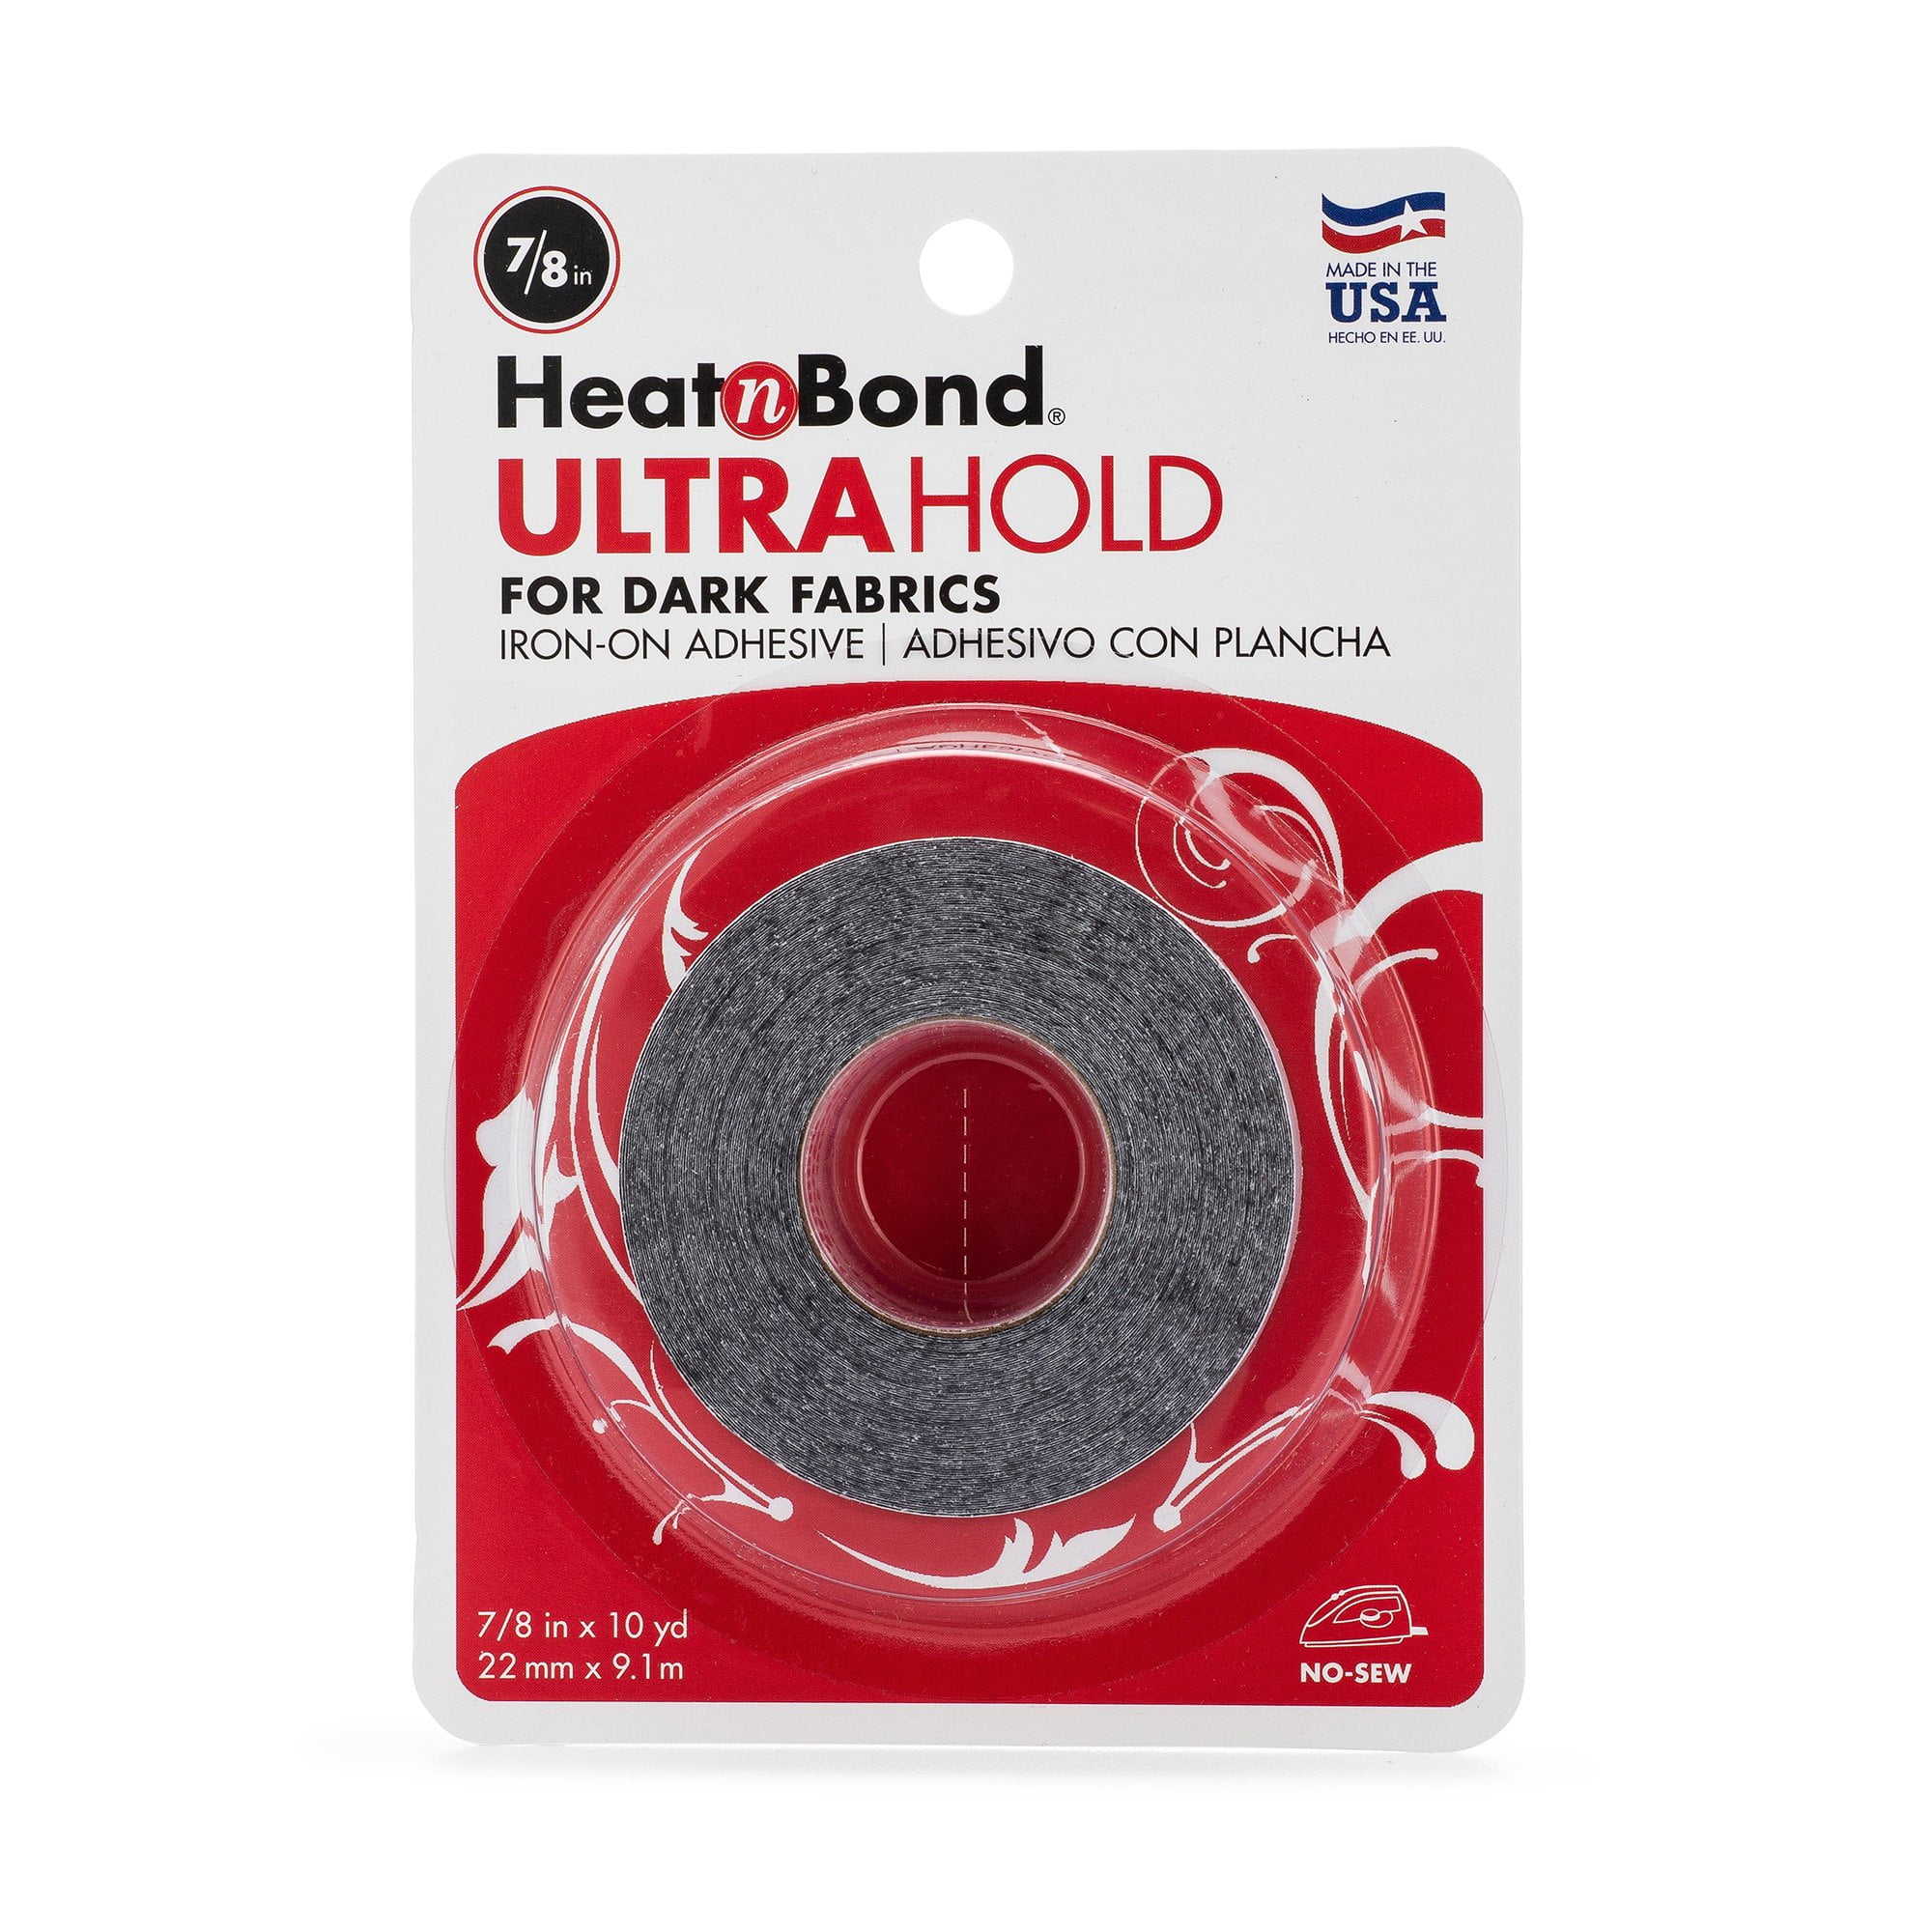 Heatnbond Ultrahold Iron-On Adhesive Tape, 7/8 Inch x 10 Yds, Black